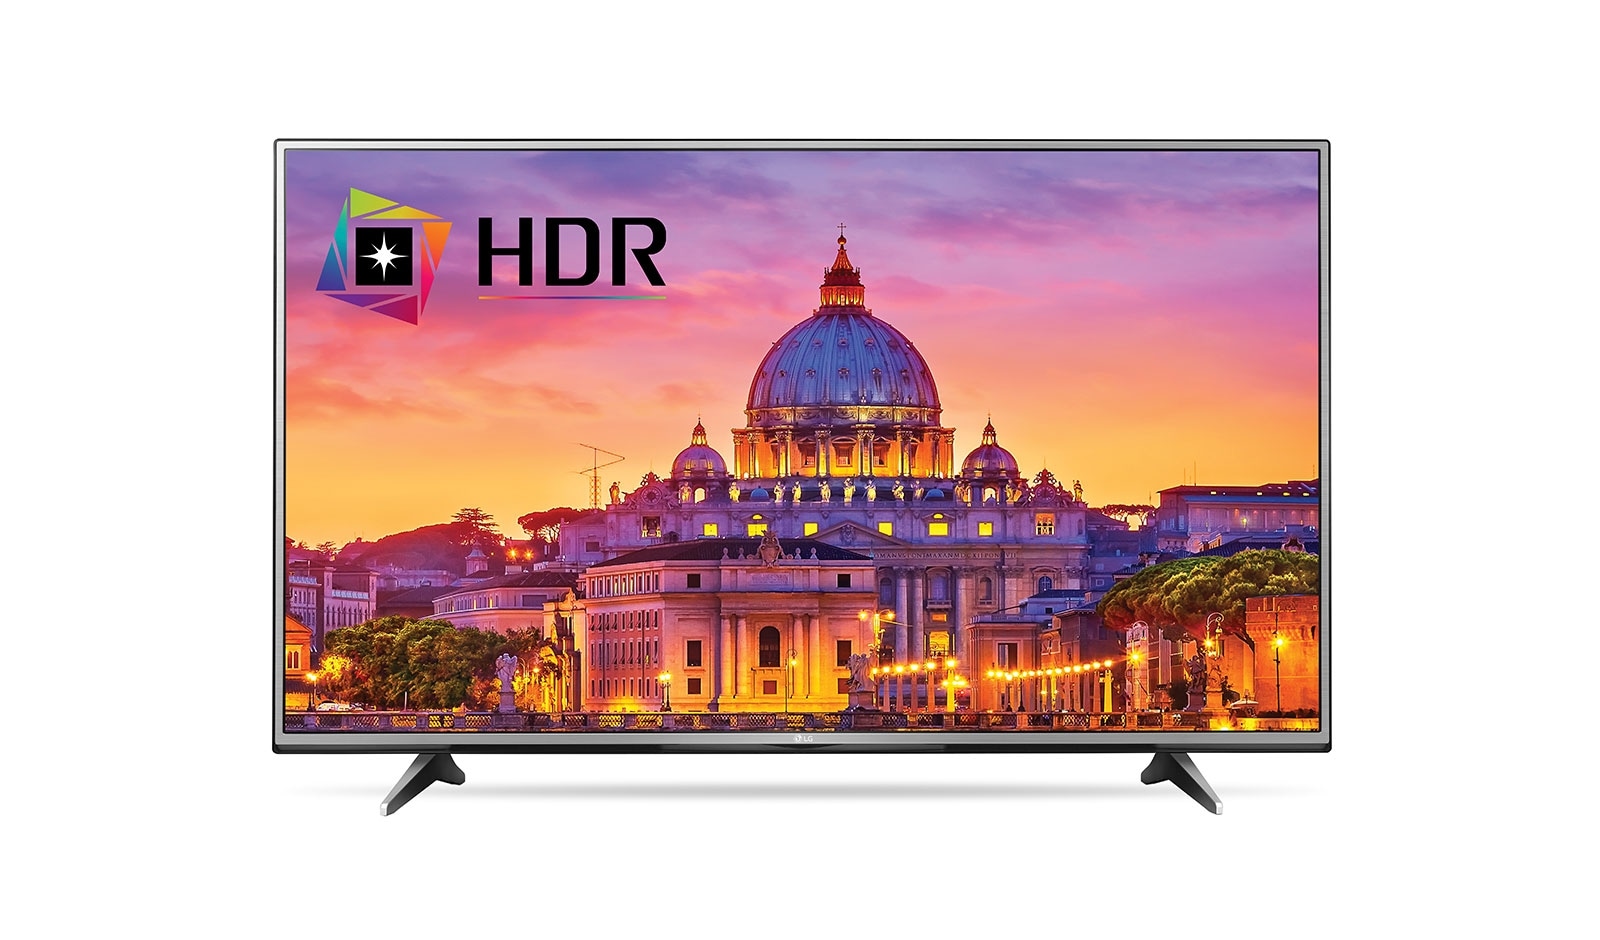 LG Smart TV | UHD 4K 55 inch TV | LG Australia